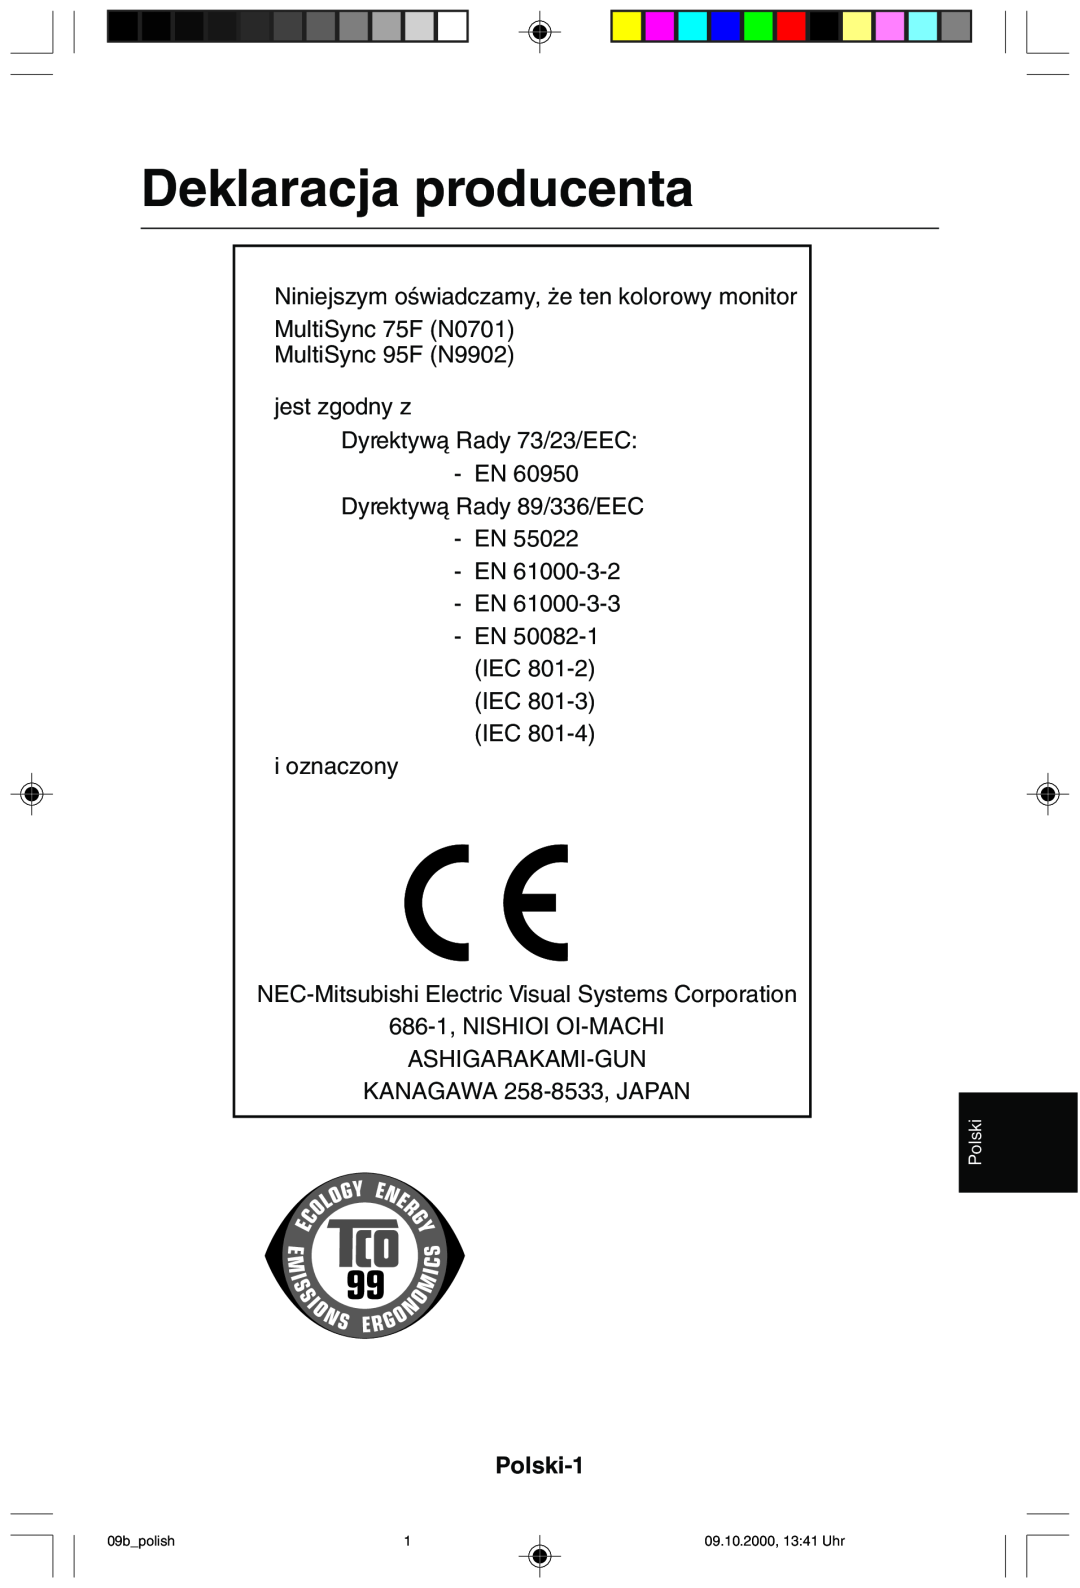 NEC 95F user manual Deklaracja producenta, Polski-1, 09bpolish, 09.10.2000, 1341 Uhr 